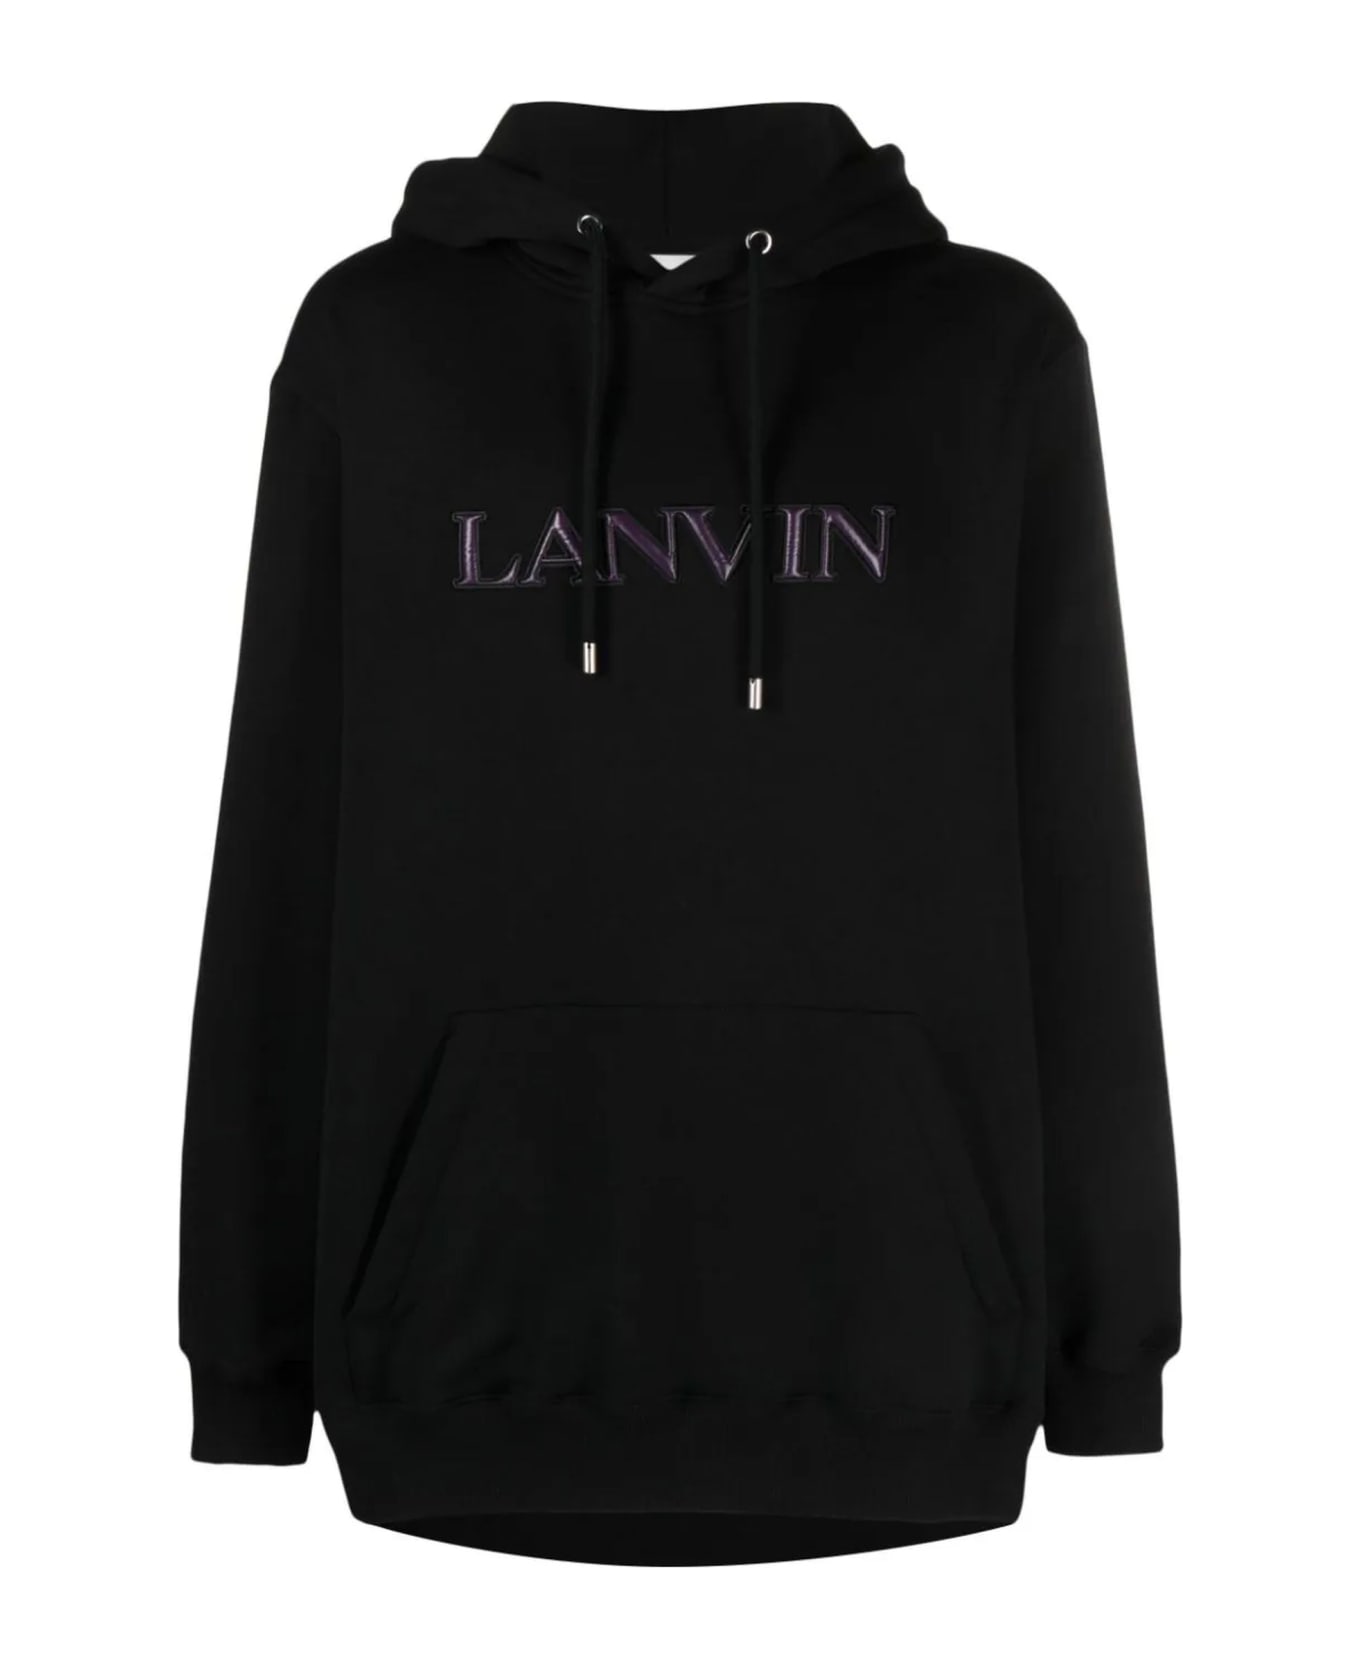 Lanvin Black Cotton Hoodie - Black